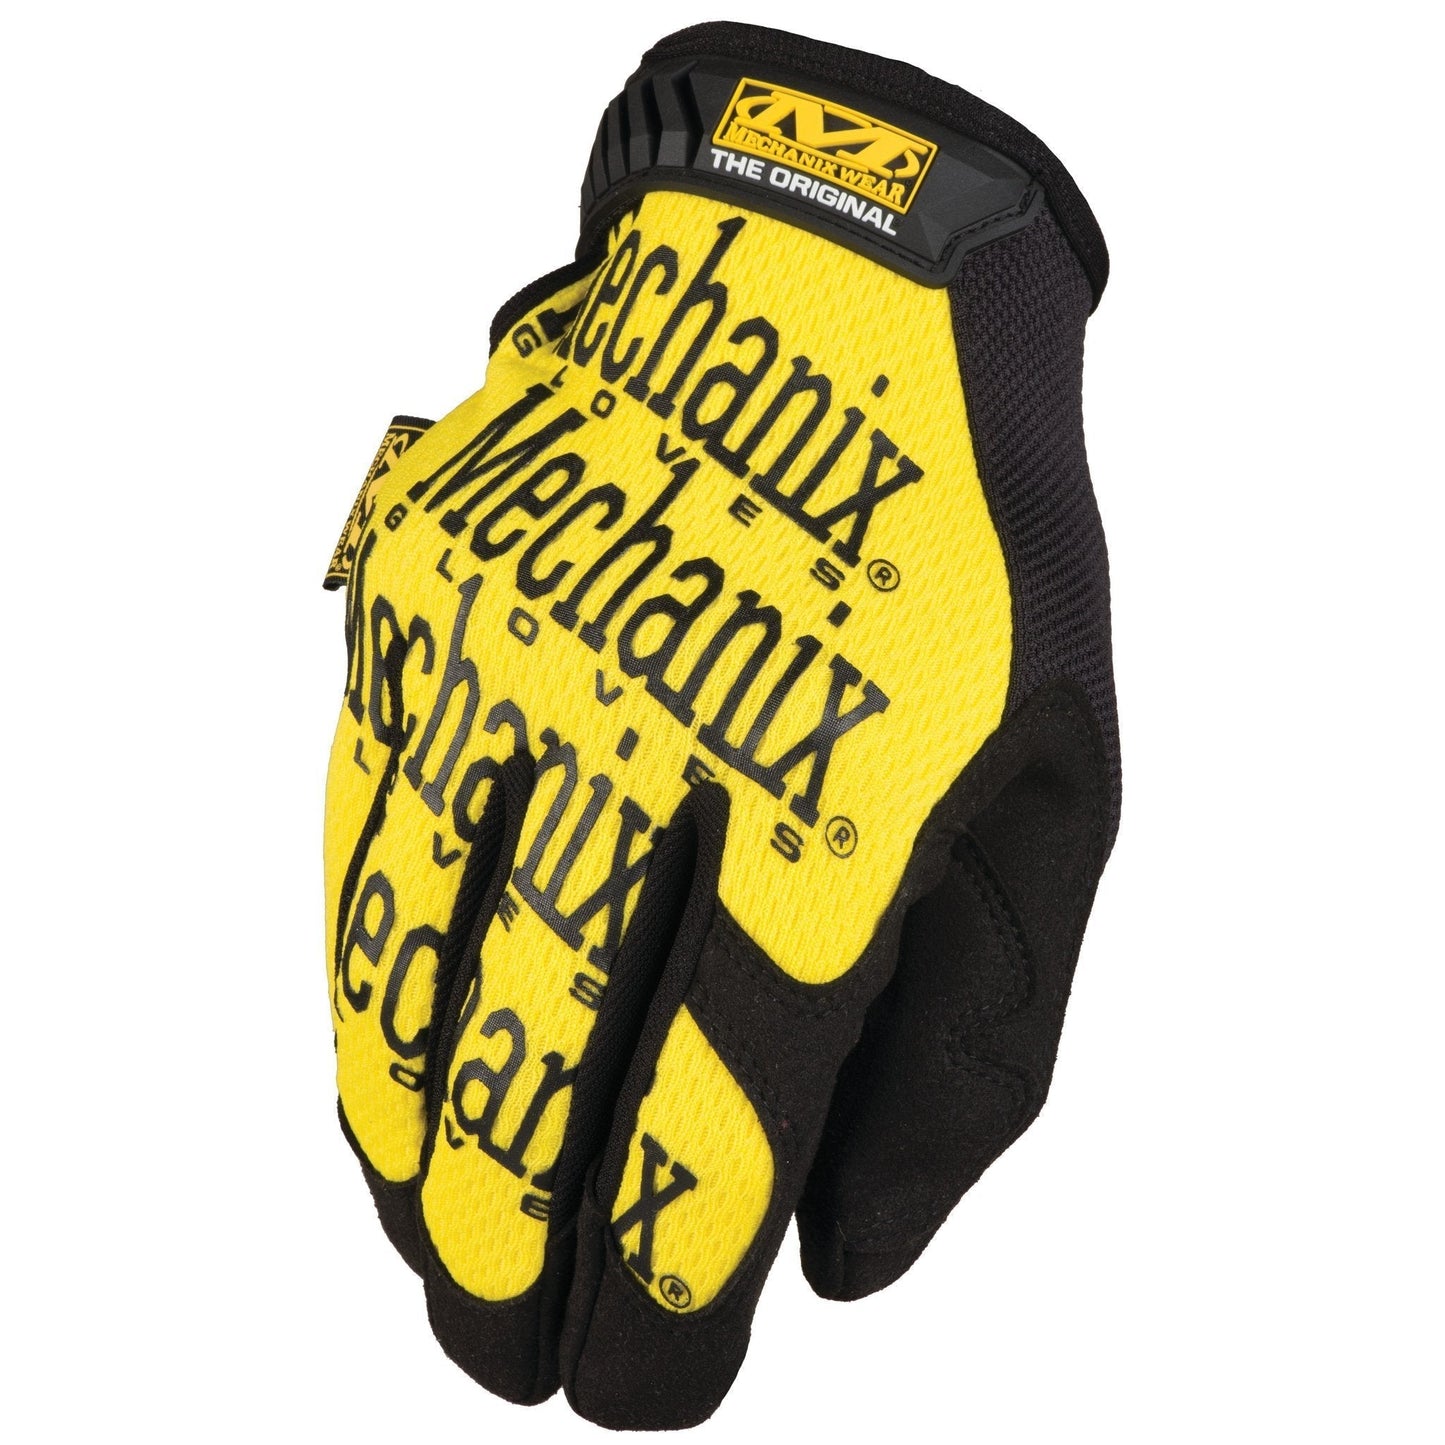 Mechanix Wear The Original Glove Yellow-Safety Gloves-Mechanix Wear-MECHANIX-MG-01-008-Small-ProtectCoAustralia